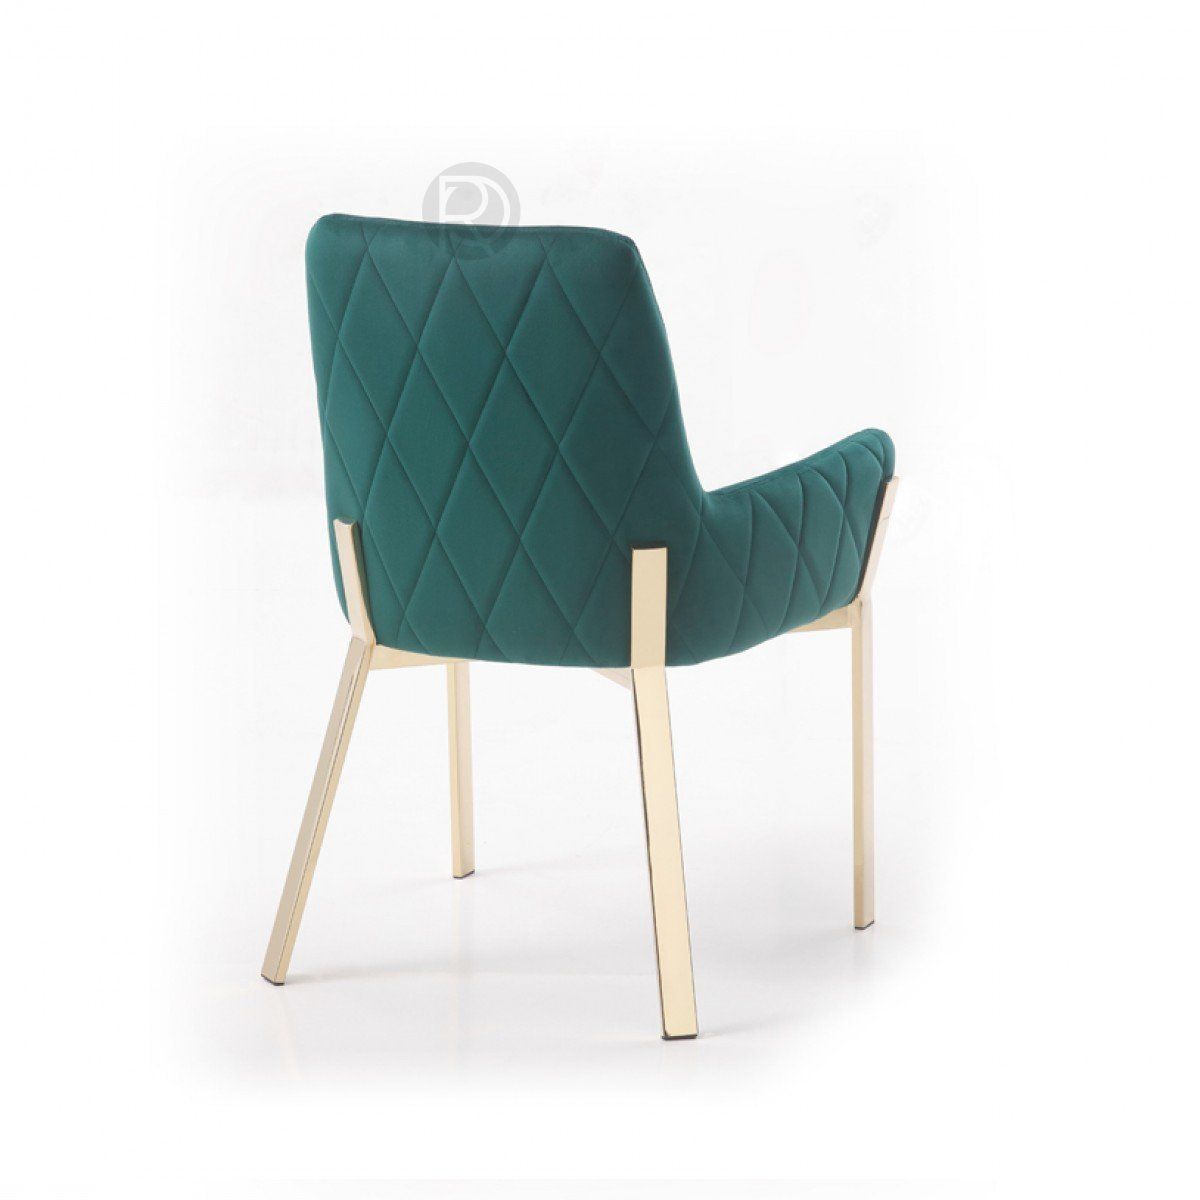 Modrest chair by Romatti